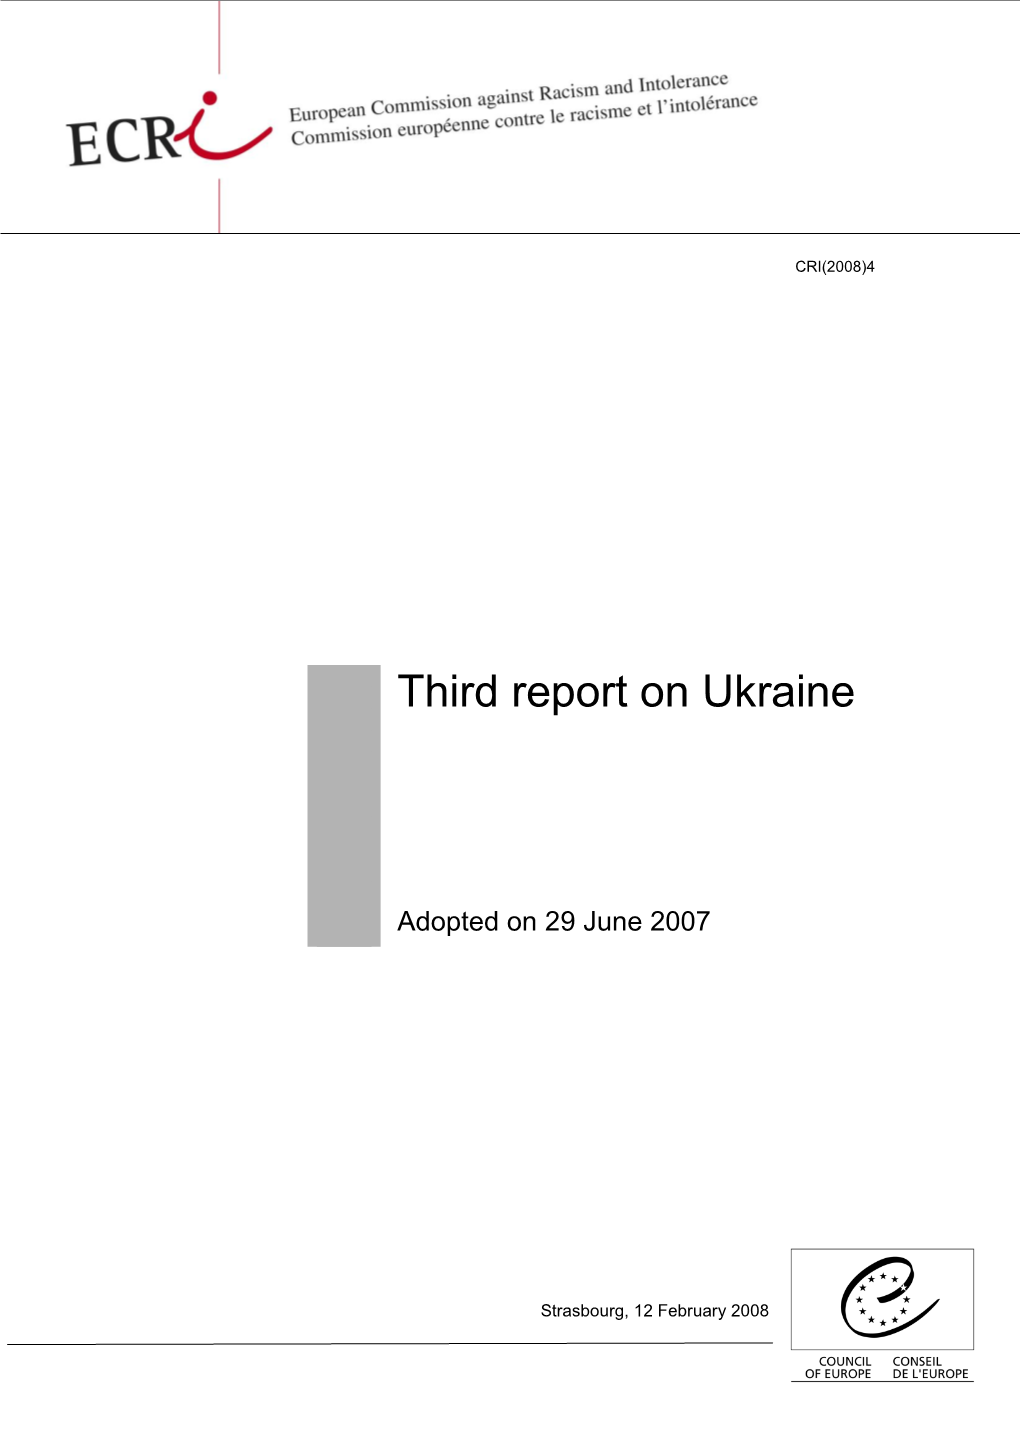 Third Report on Ukraine